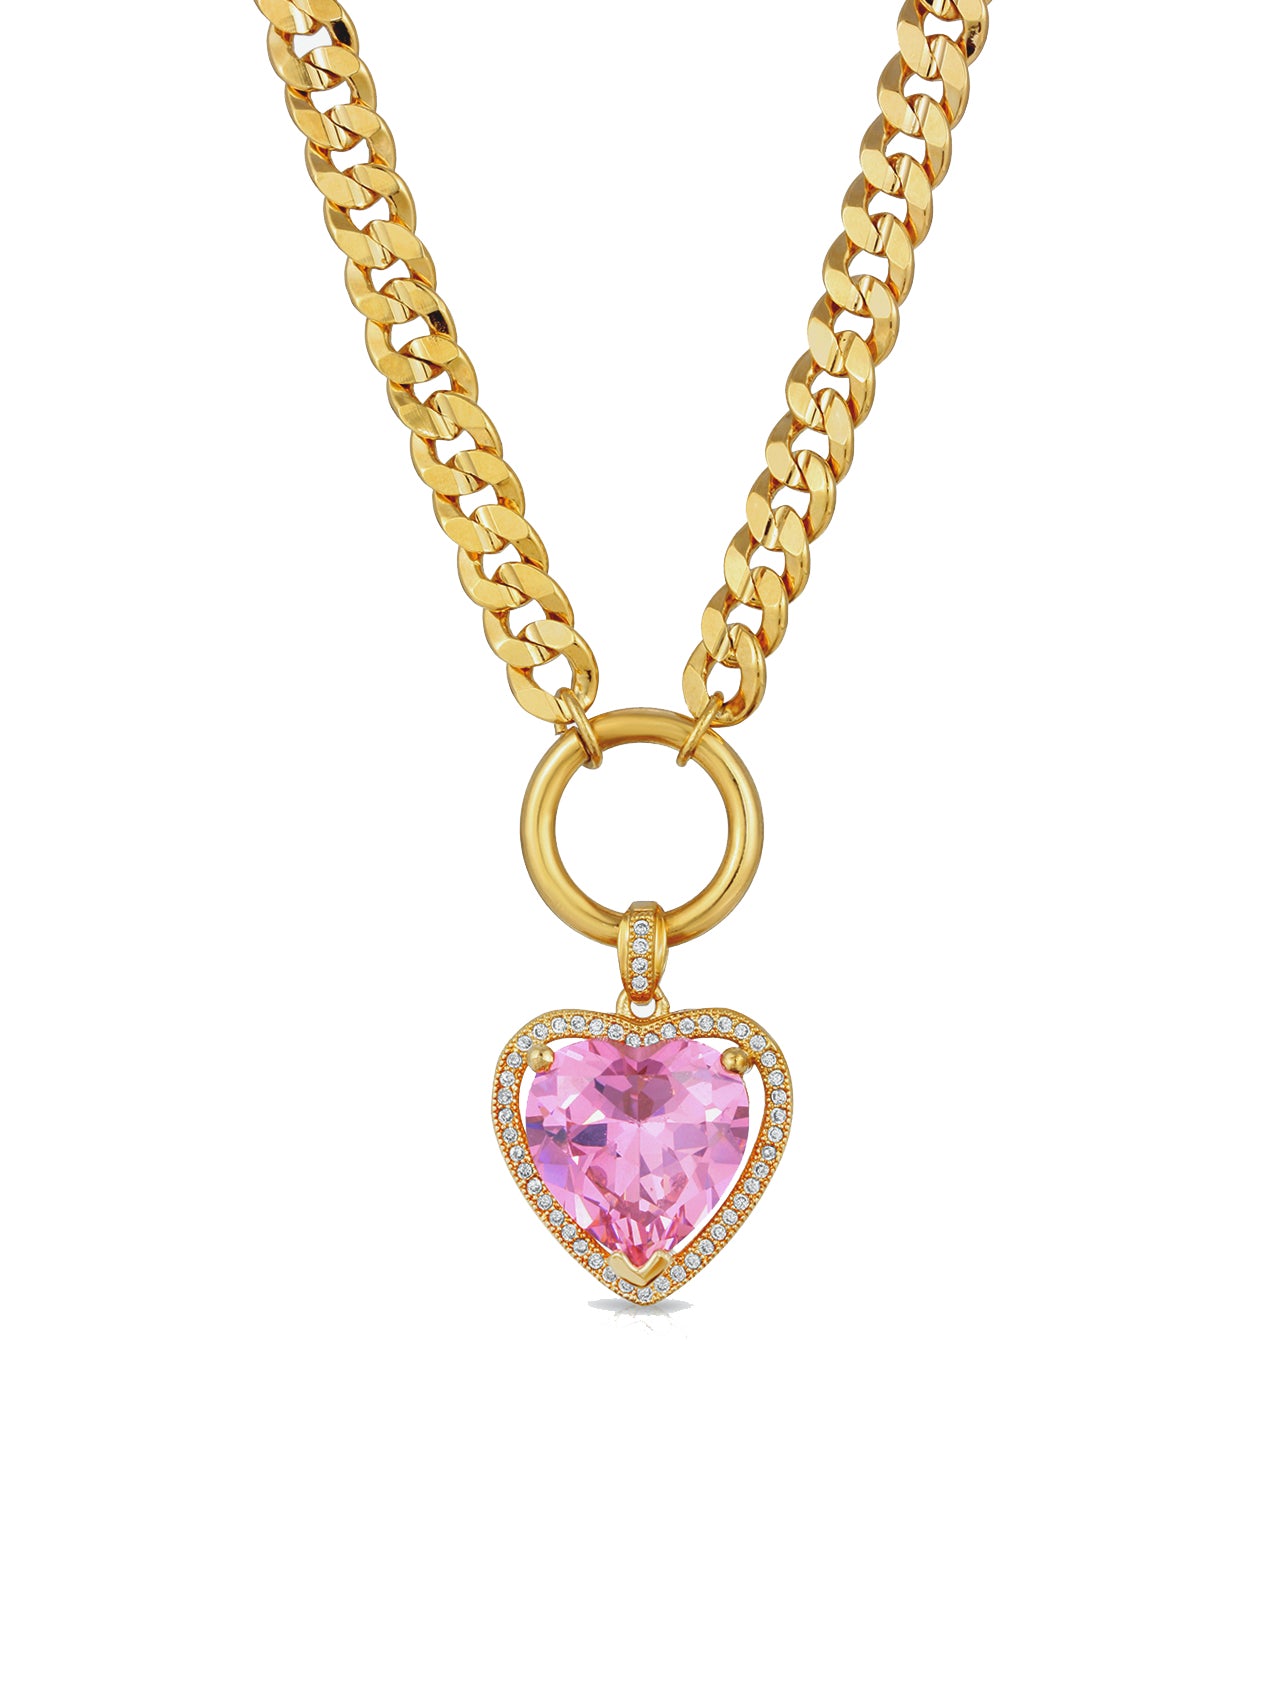 The Jonna Heart Necklace